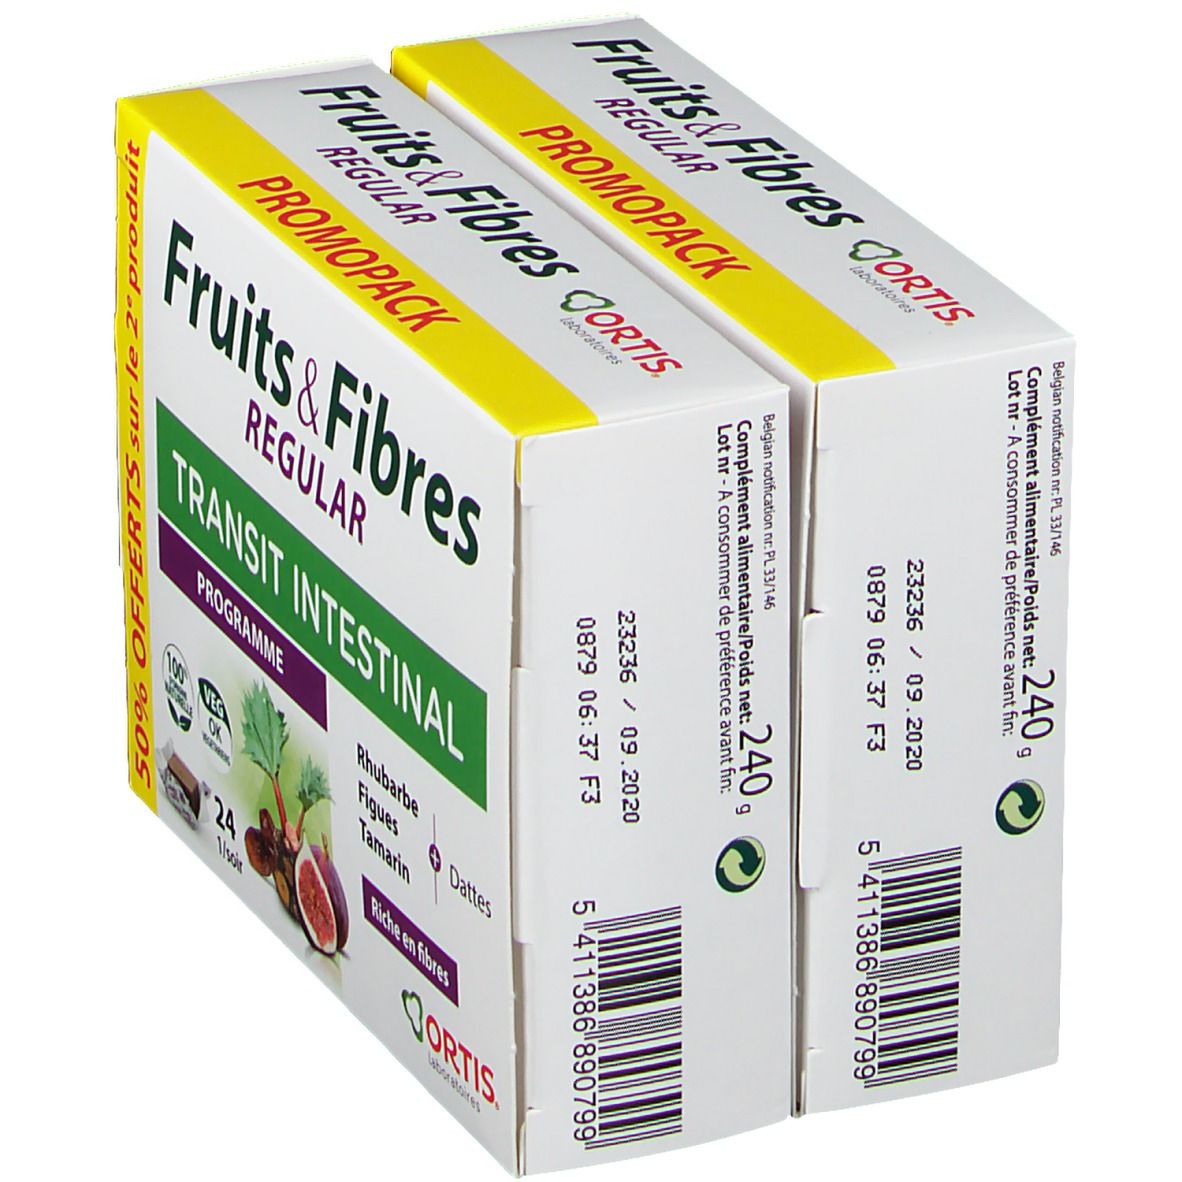 Ortis® Fruits & Fibres Regular Transit Intestinal